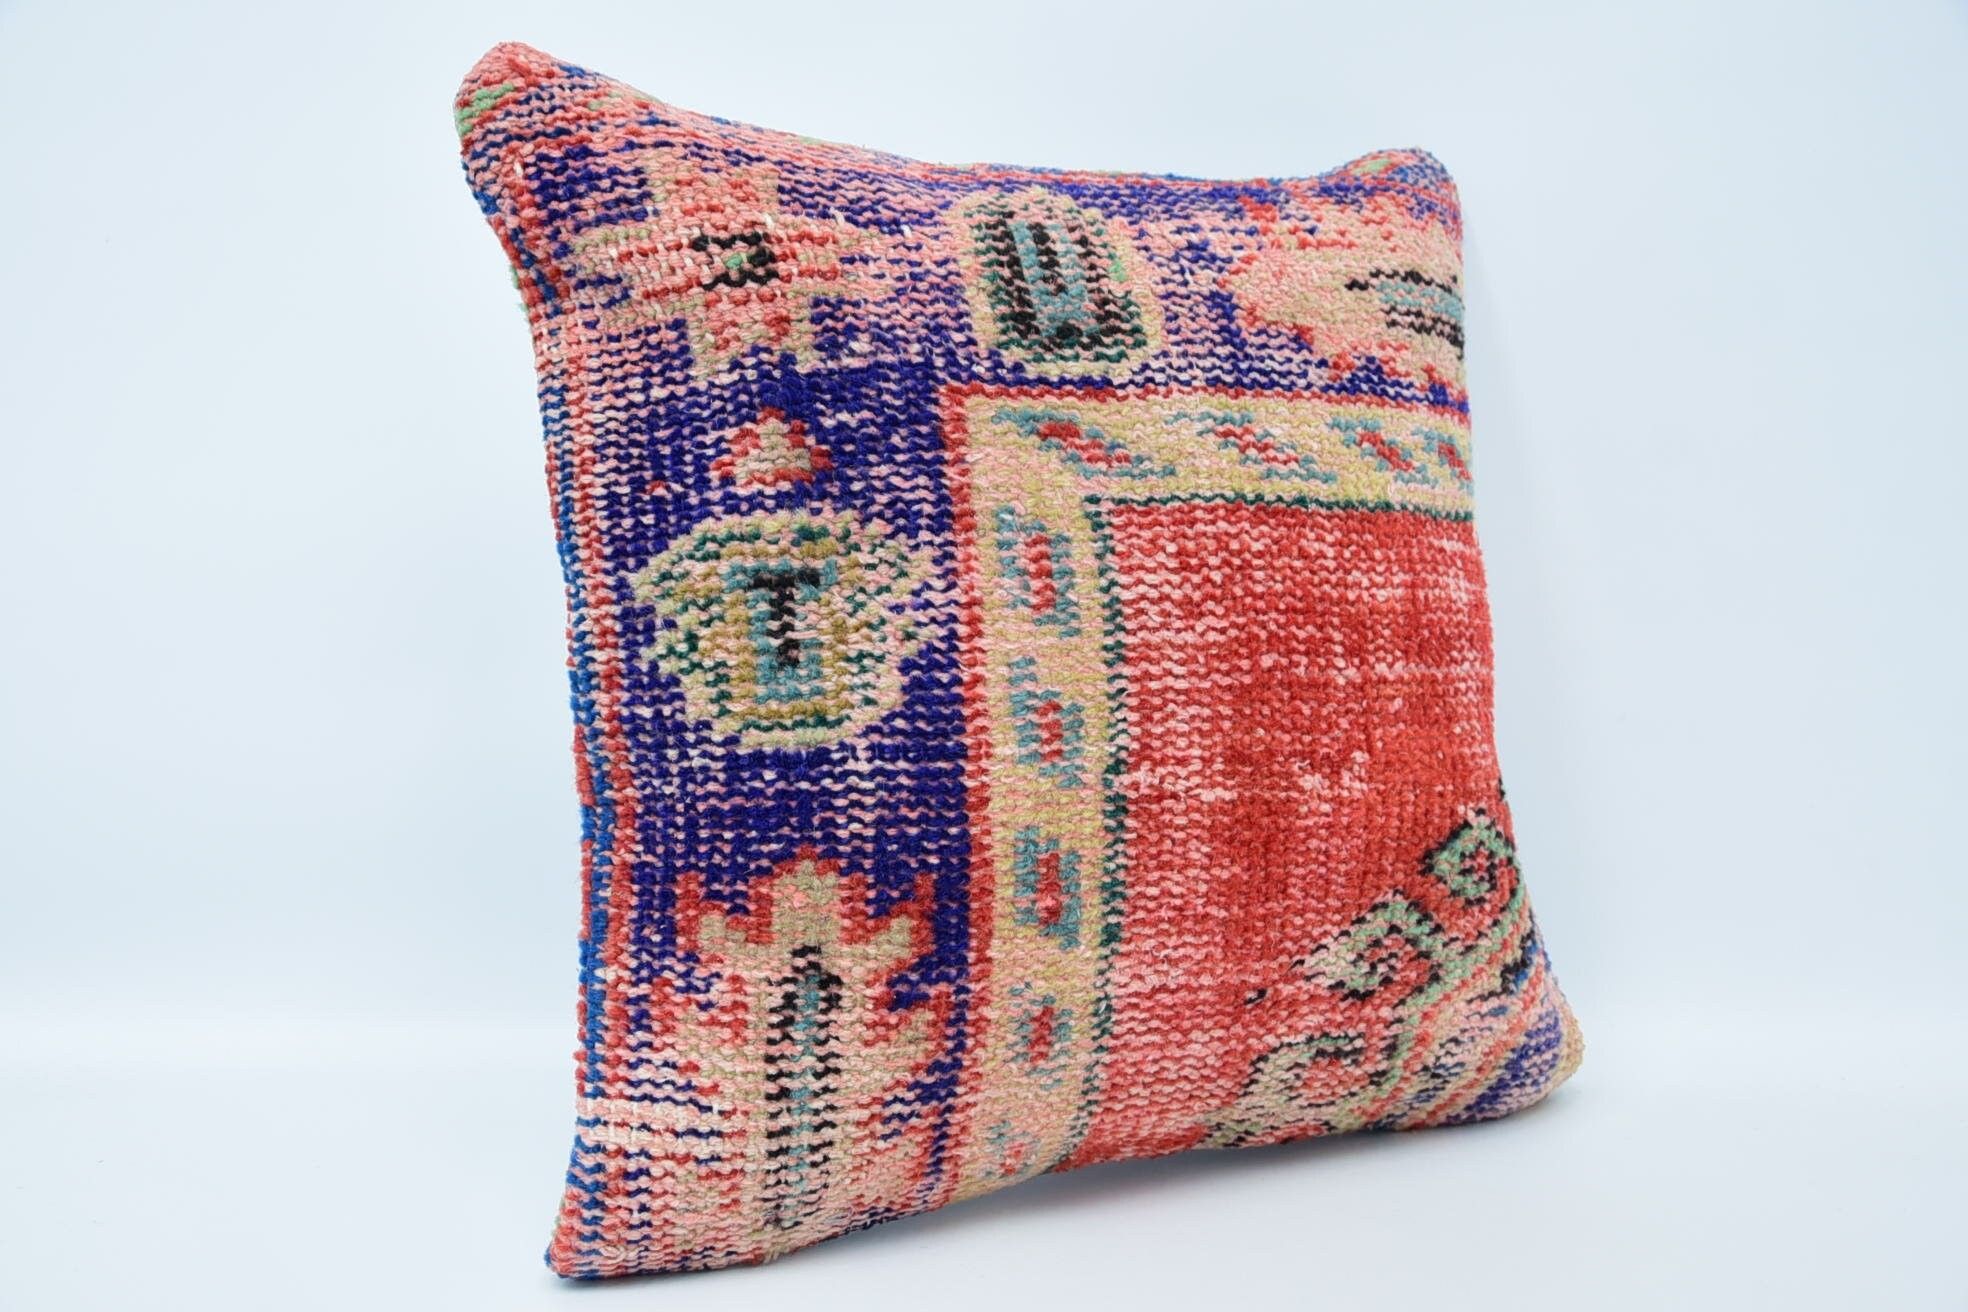 Pillow for Sofa, Gift Pillow, Handmade Kilim Cushion, Bolster Cushion Cover, 18"x18" Red Pillow, Office Chair Pillow Case